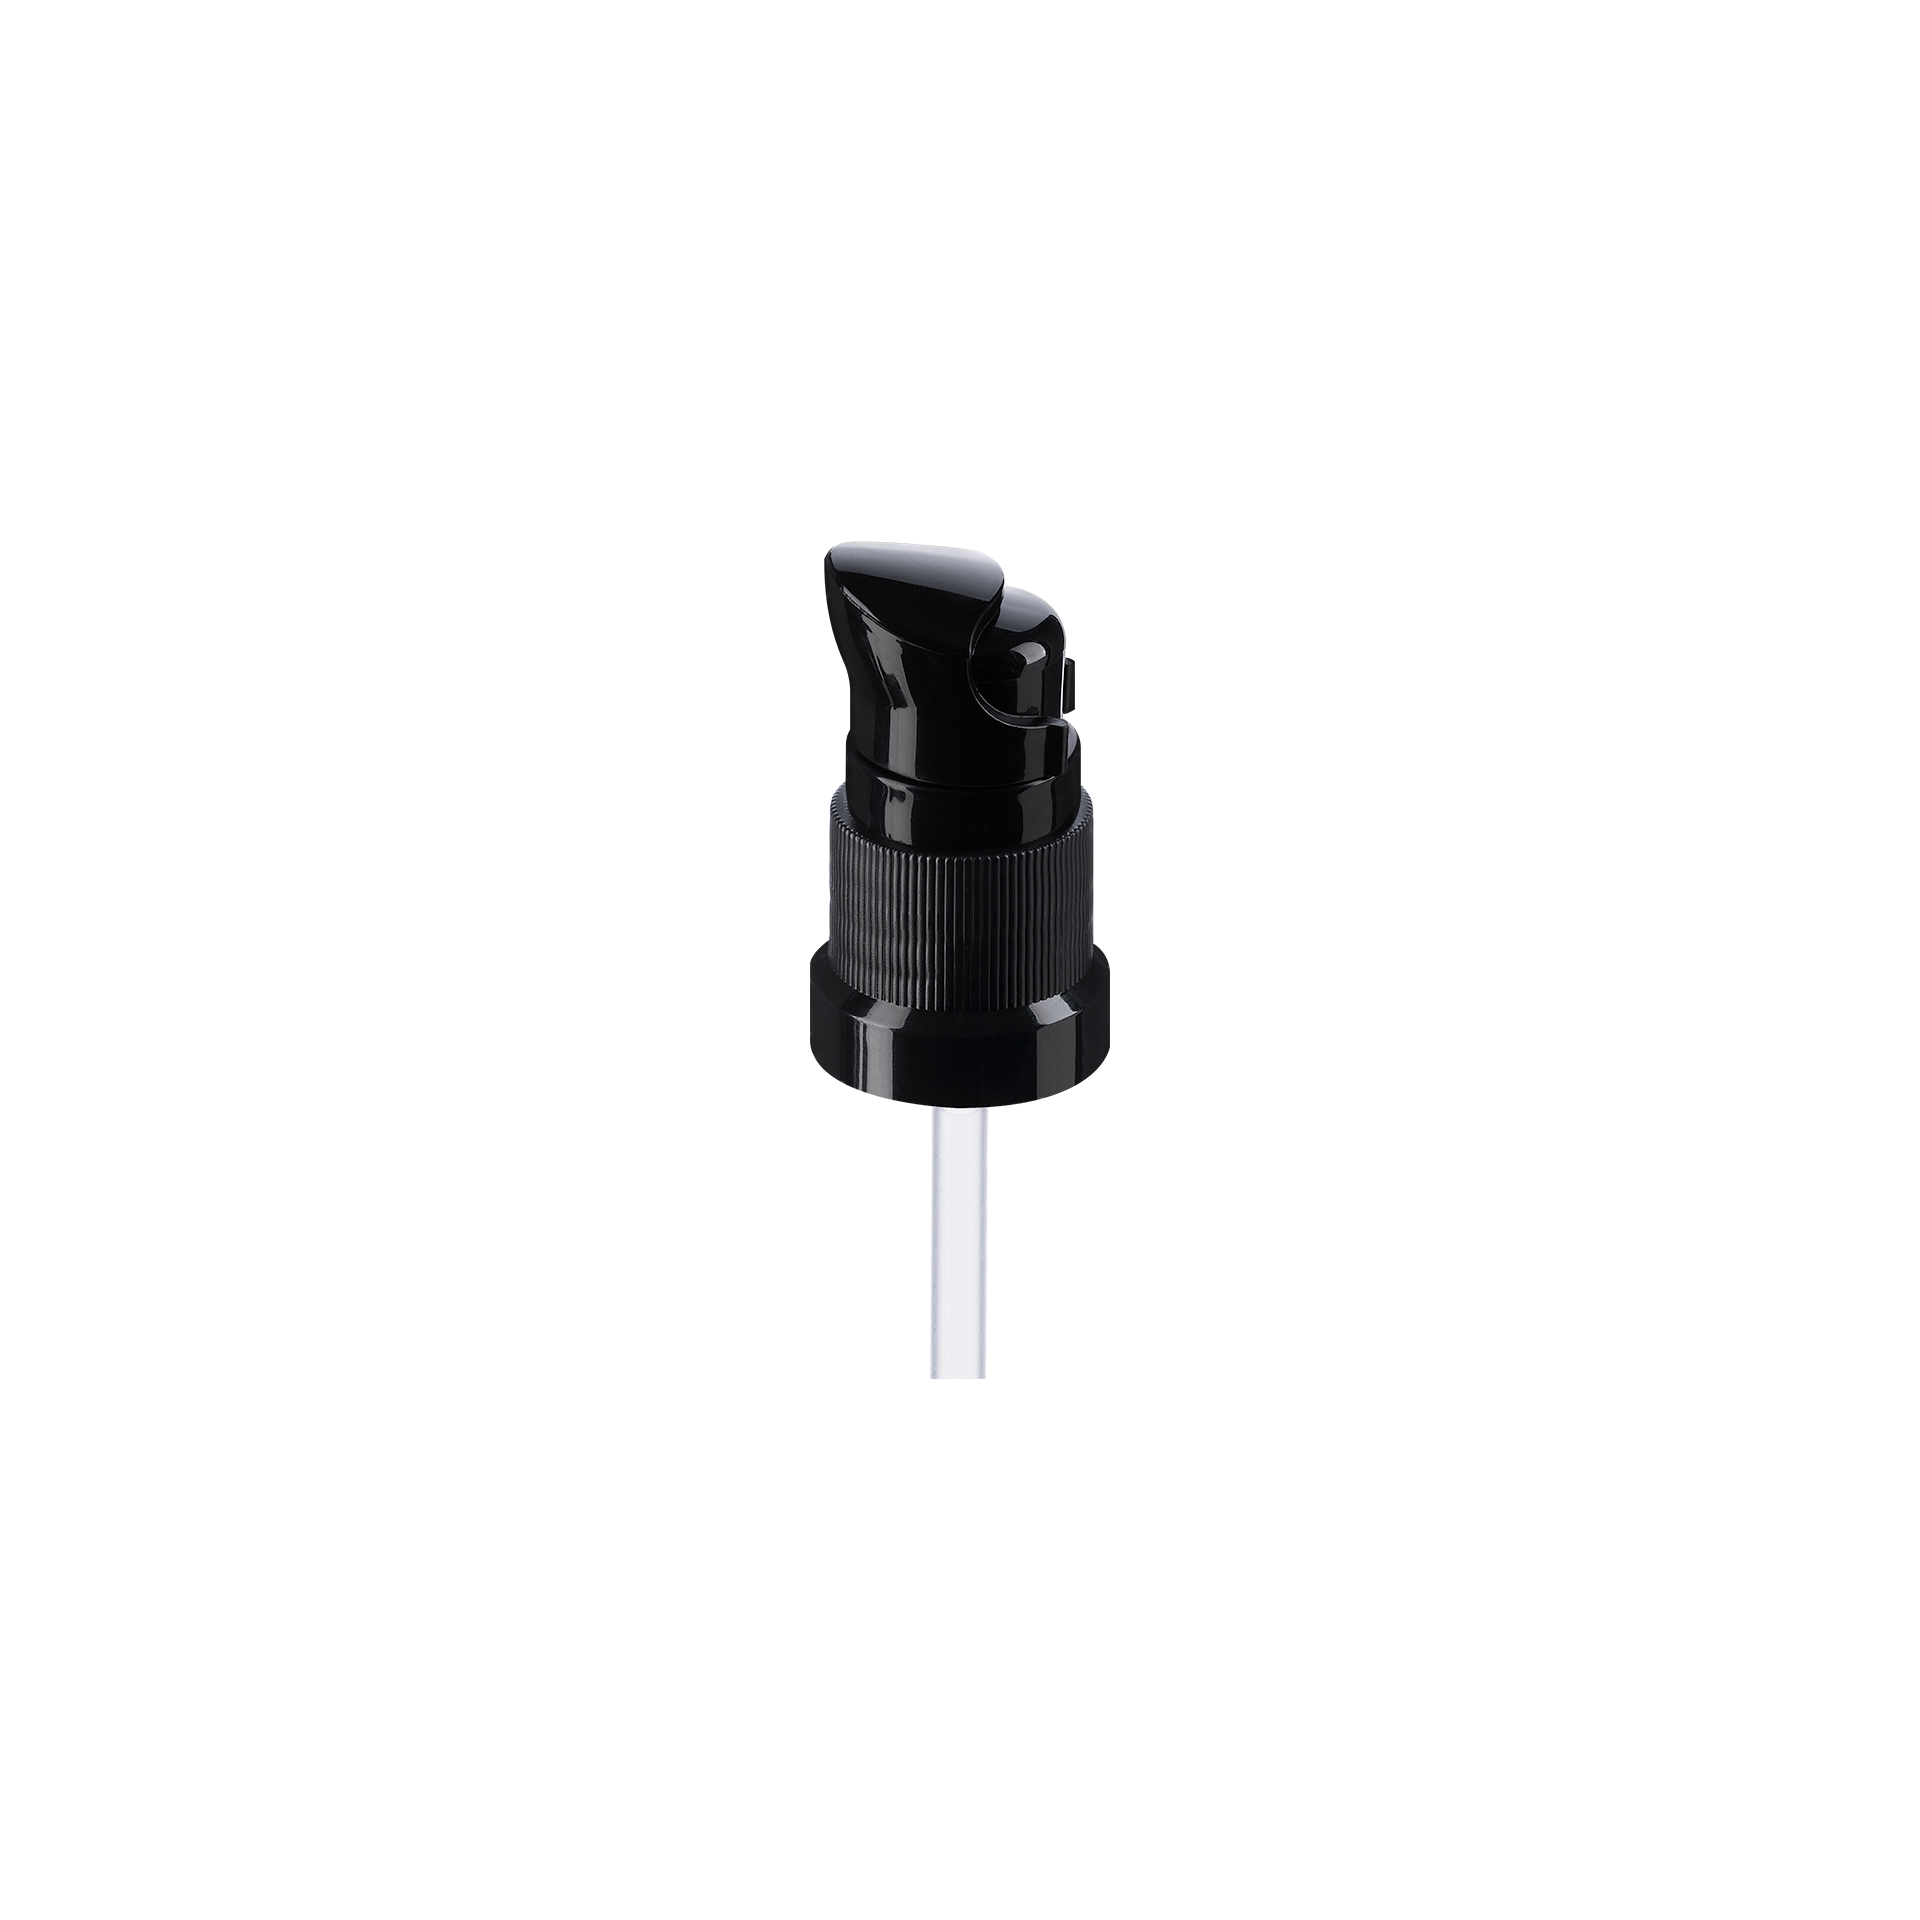 Lotion pump Metropolitan DIN18, PP, black, dose 0.10ml, black security clip (Ginger 10)